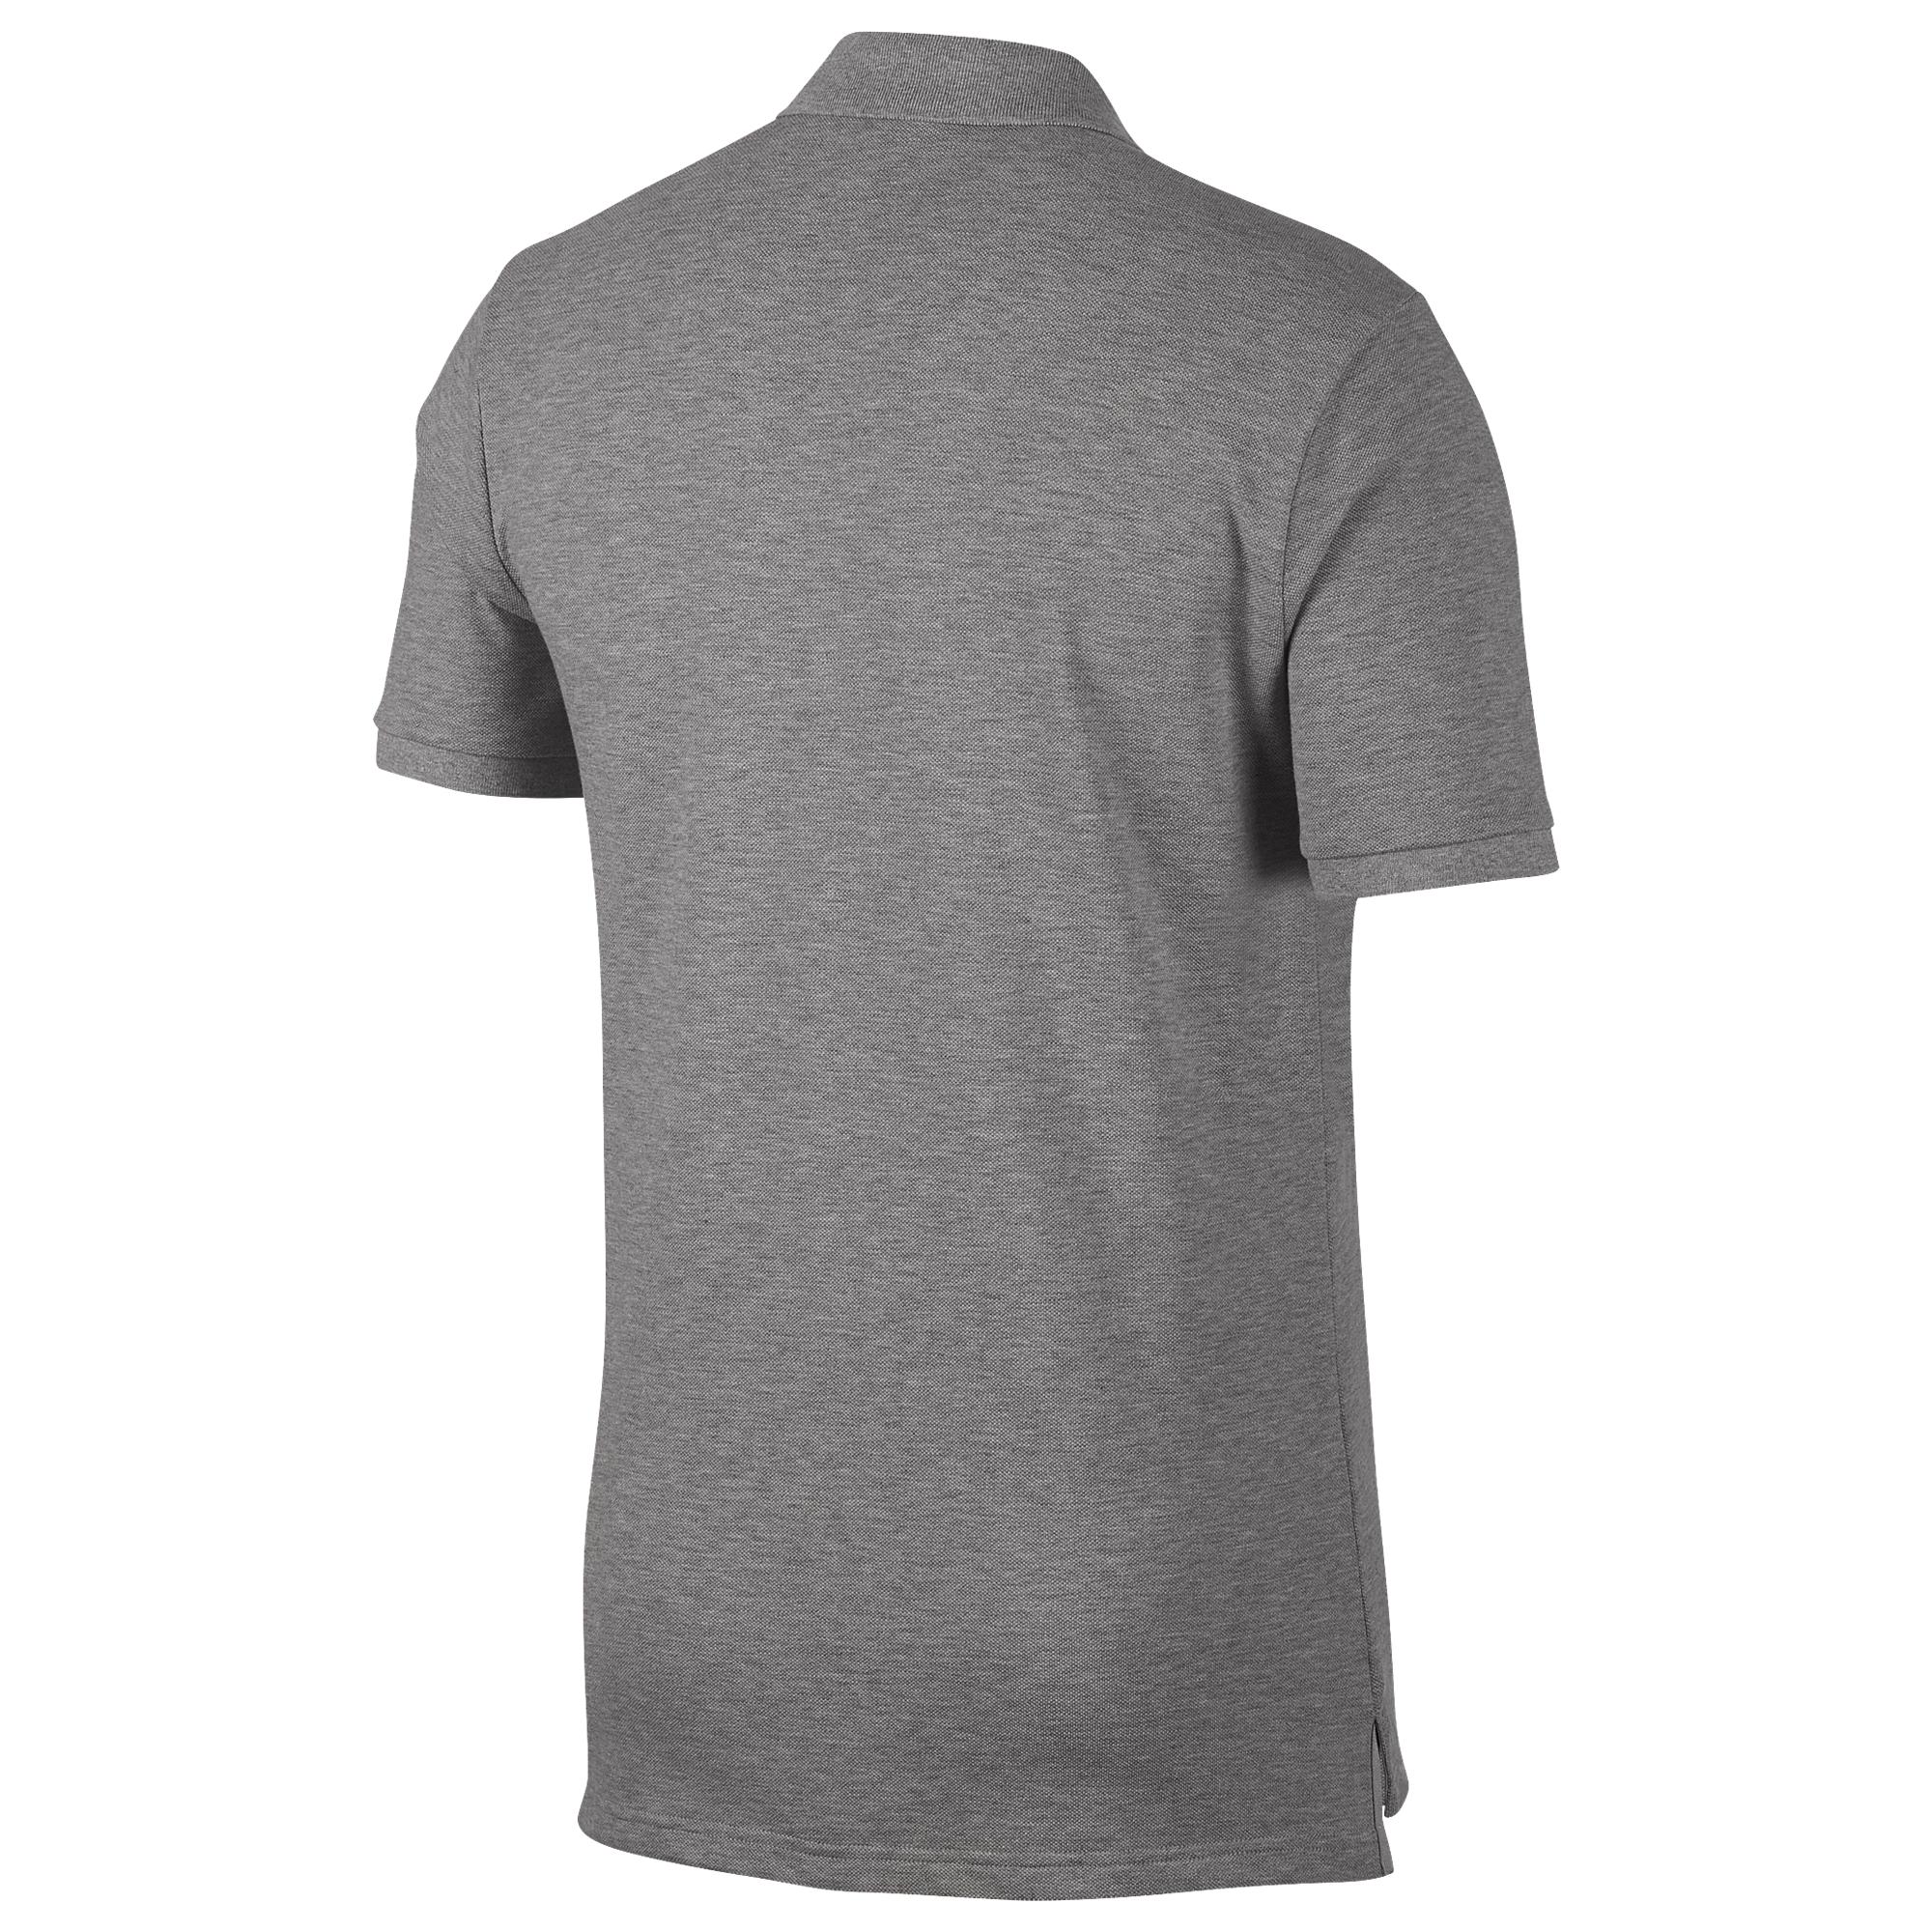 Nike Logo Polo Shirt in Dark Grey Heather/White (Gray) for Men - Lyst